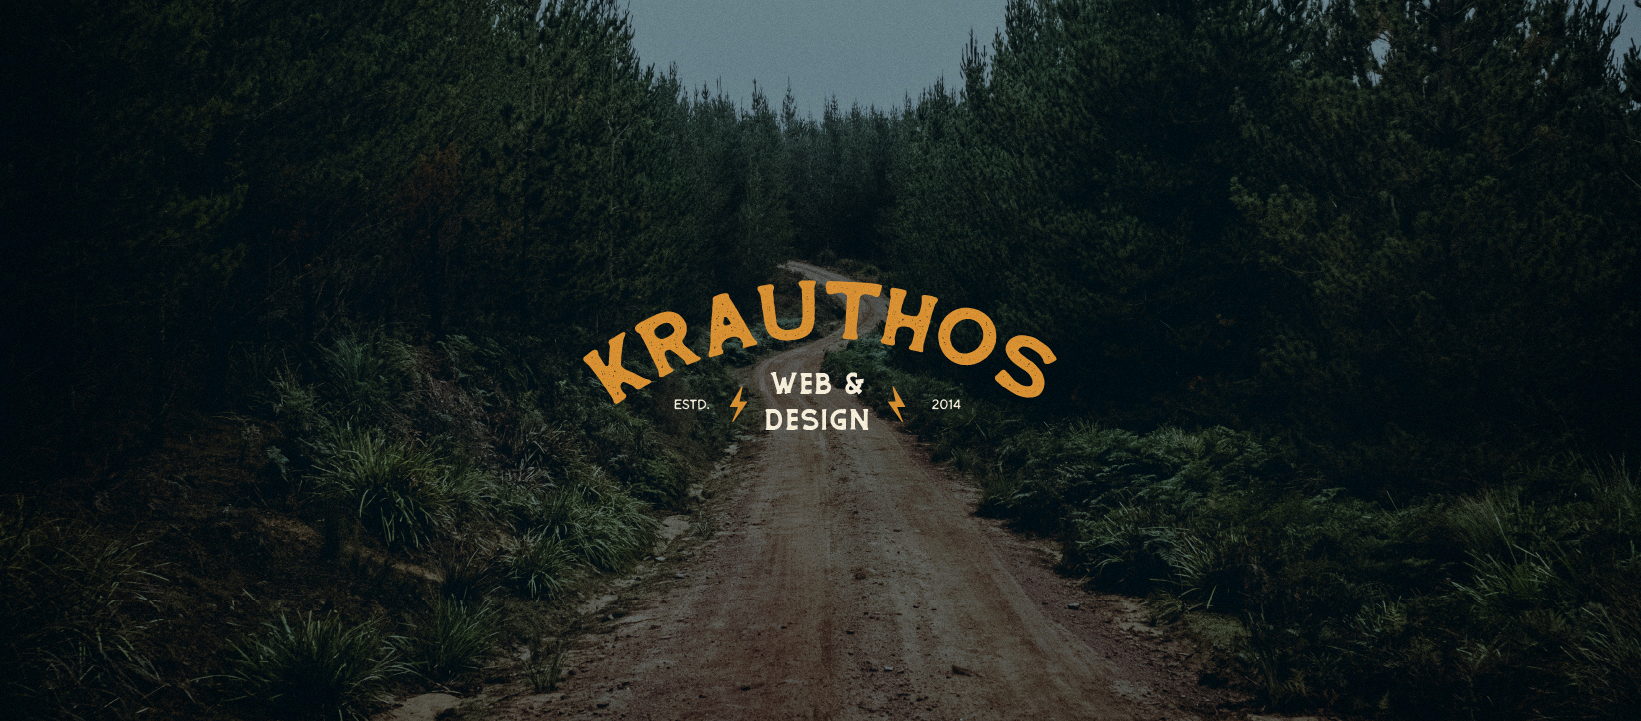 Krauthos Web & Design